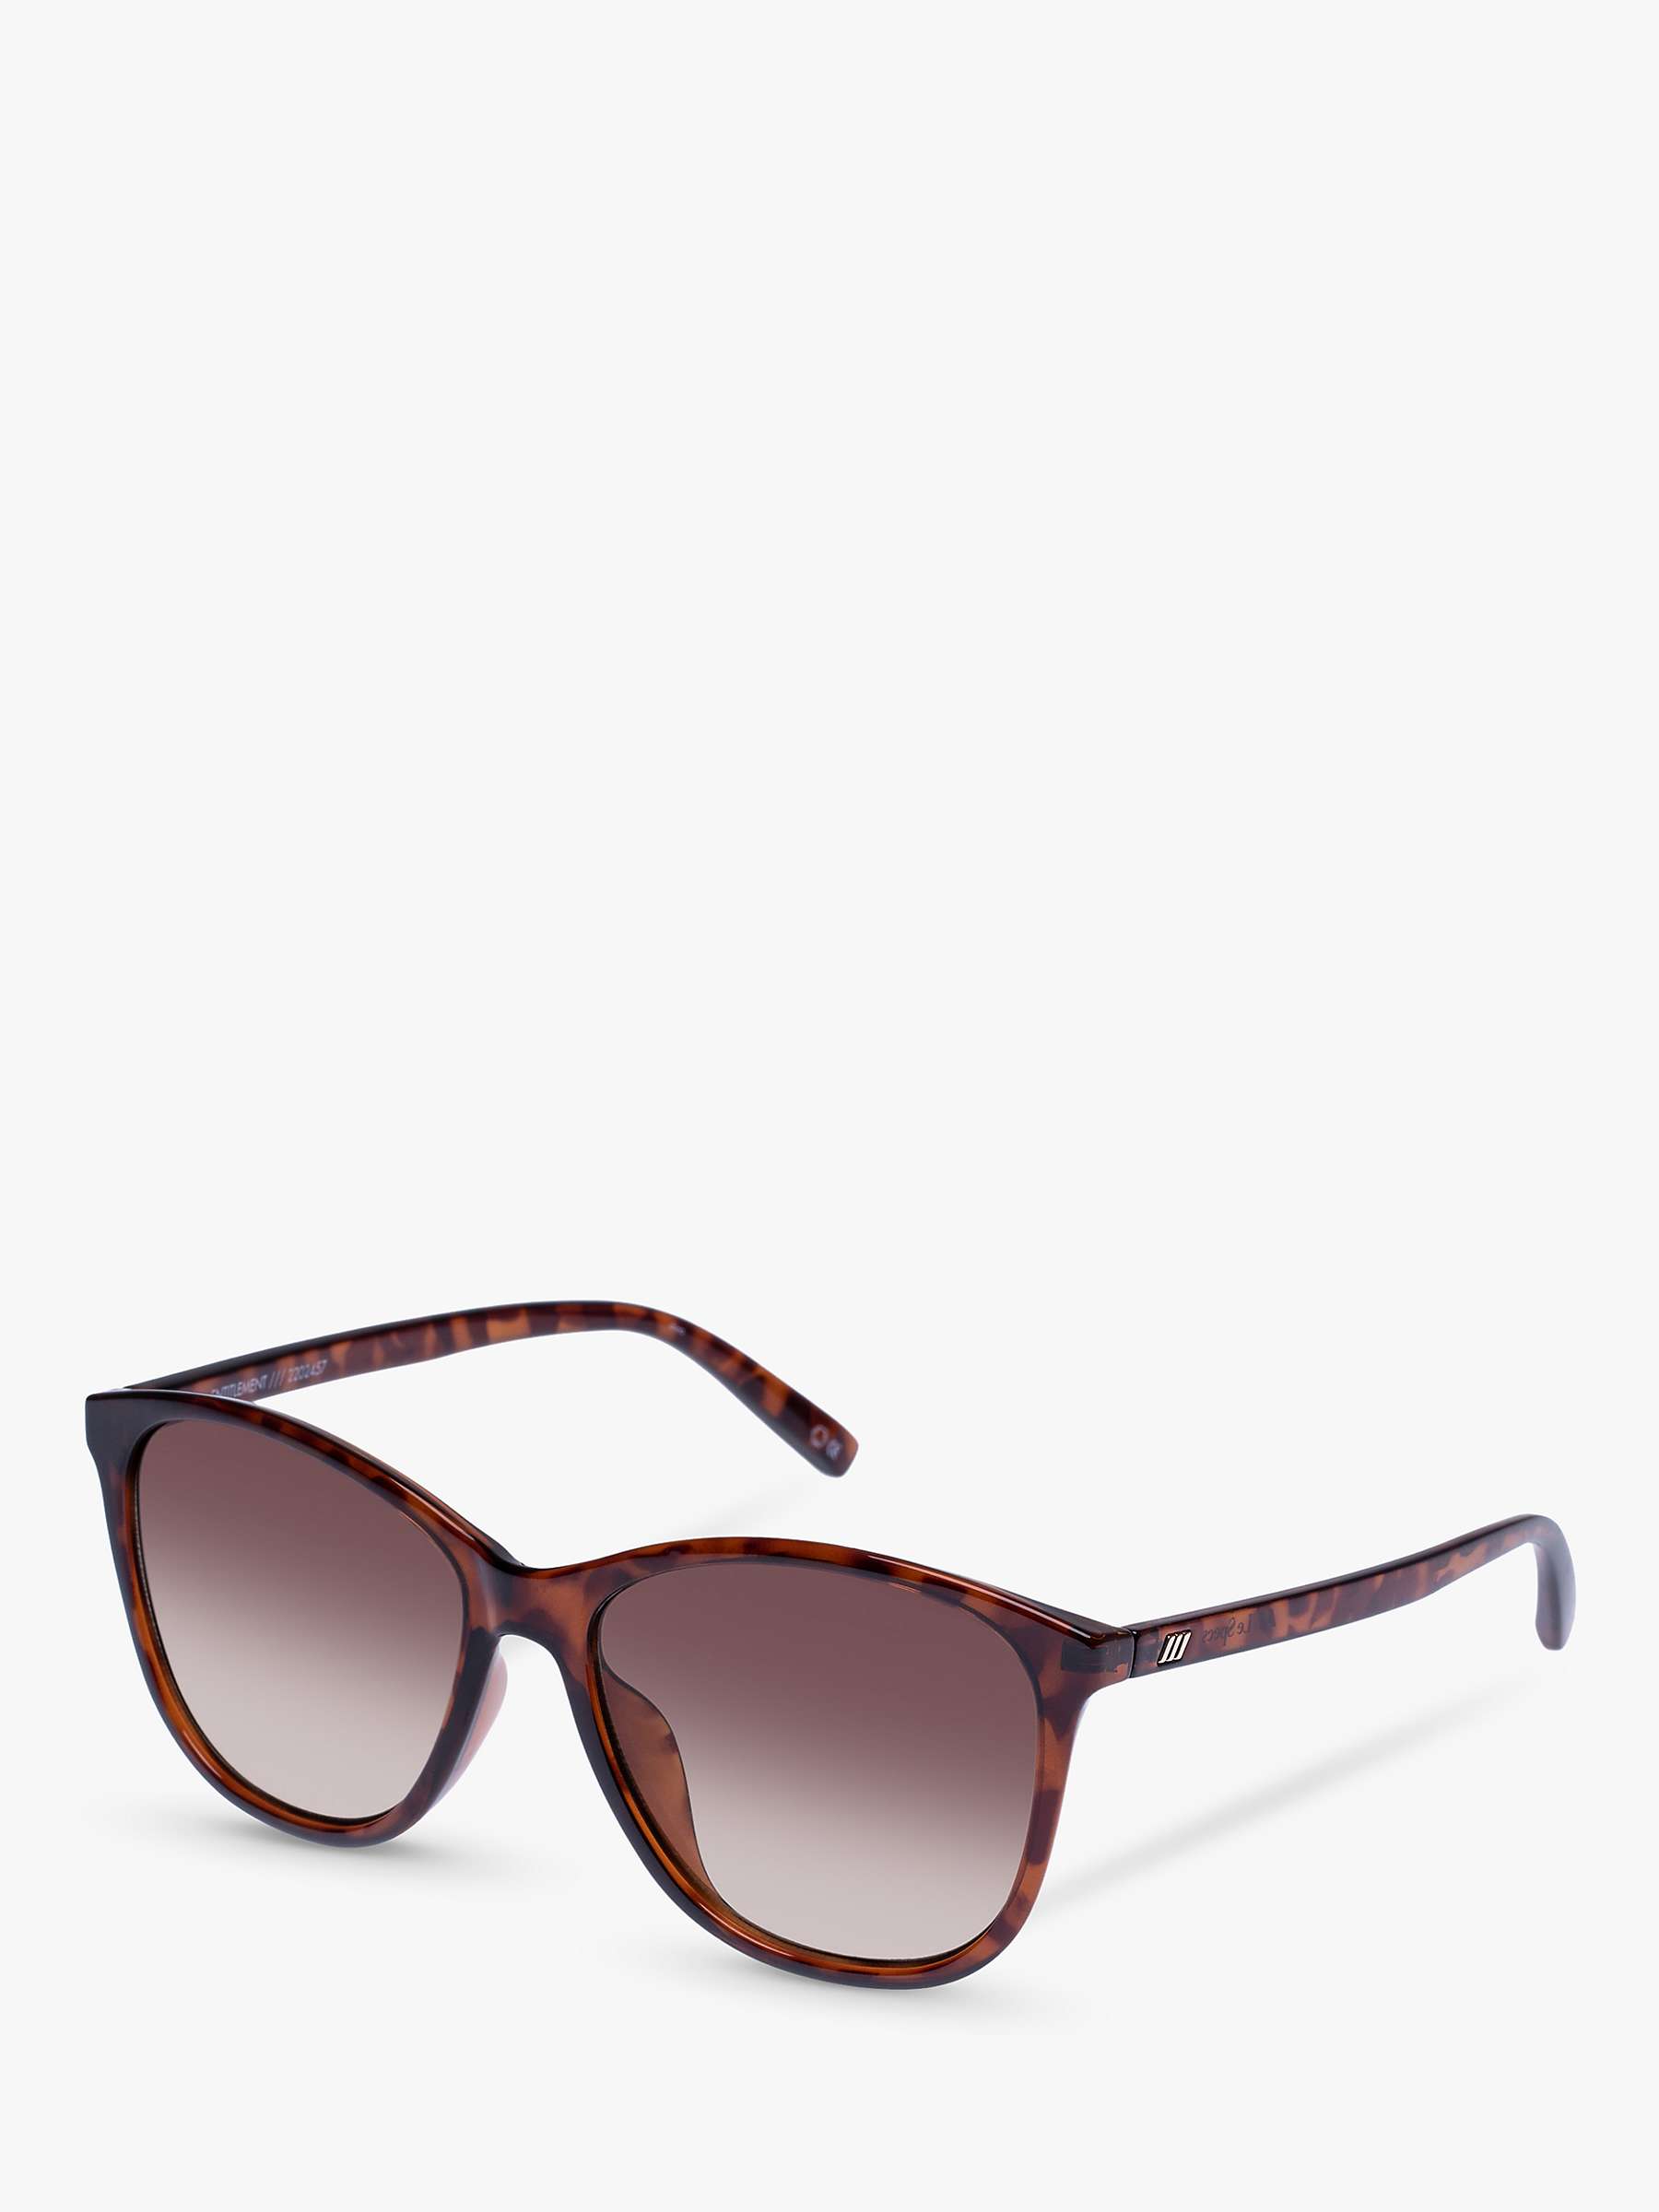 Buy Le Specs Women's Entitlement Cat's Eye Sunglasses, Tortoise/Brown Gradient Online at johnlewis.com